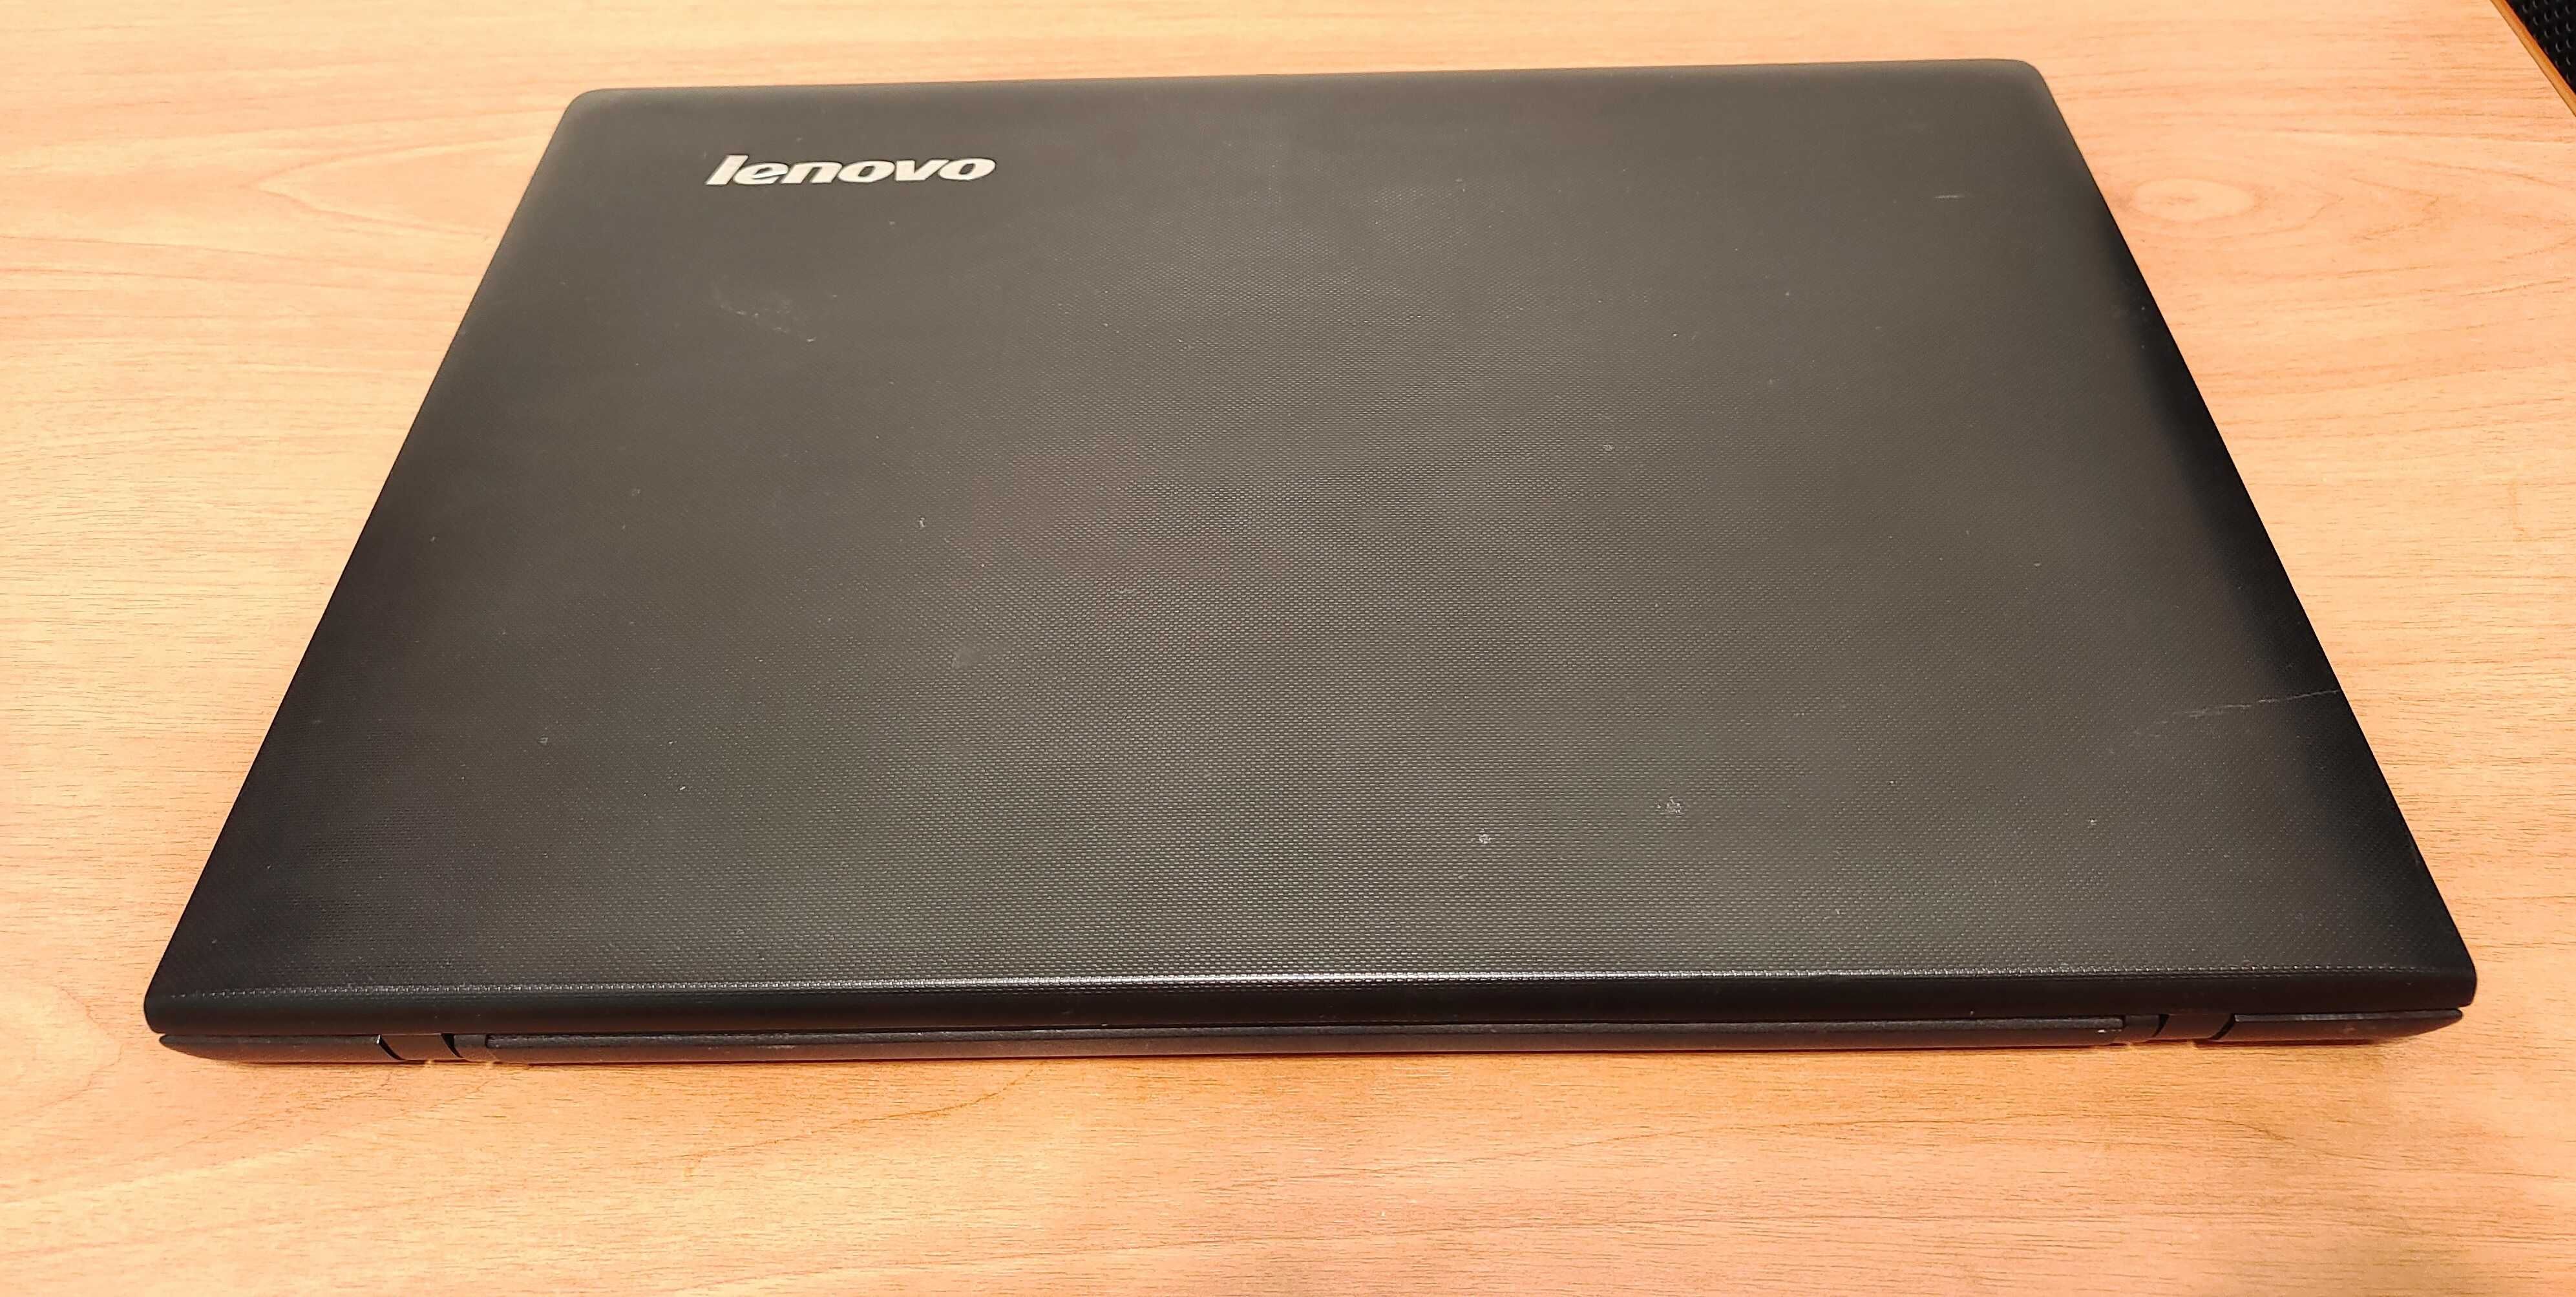 Lenovo G50-70 model 20351 в хор сост.